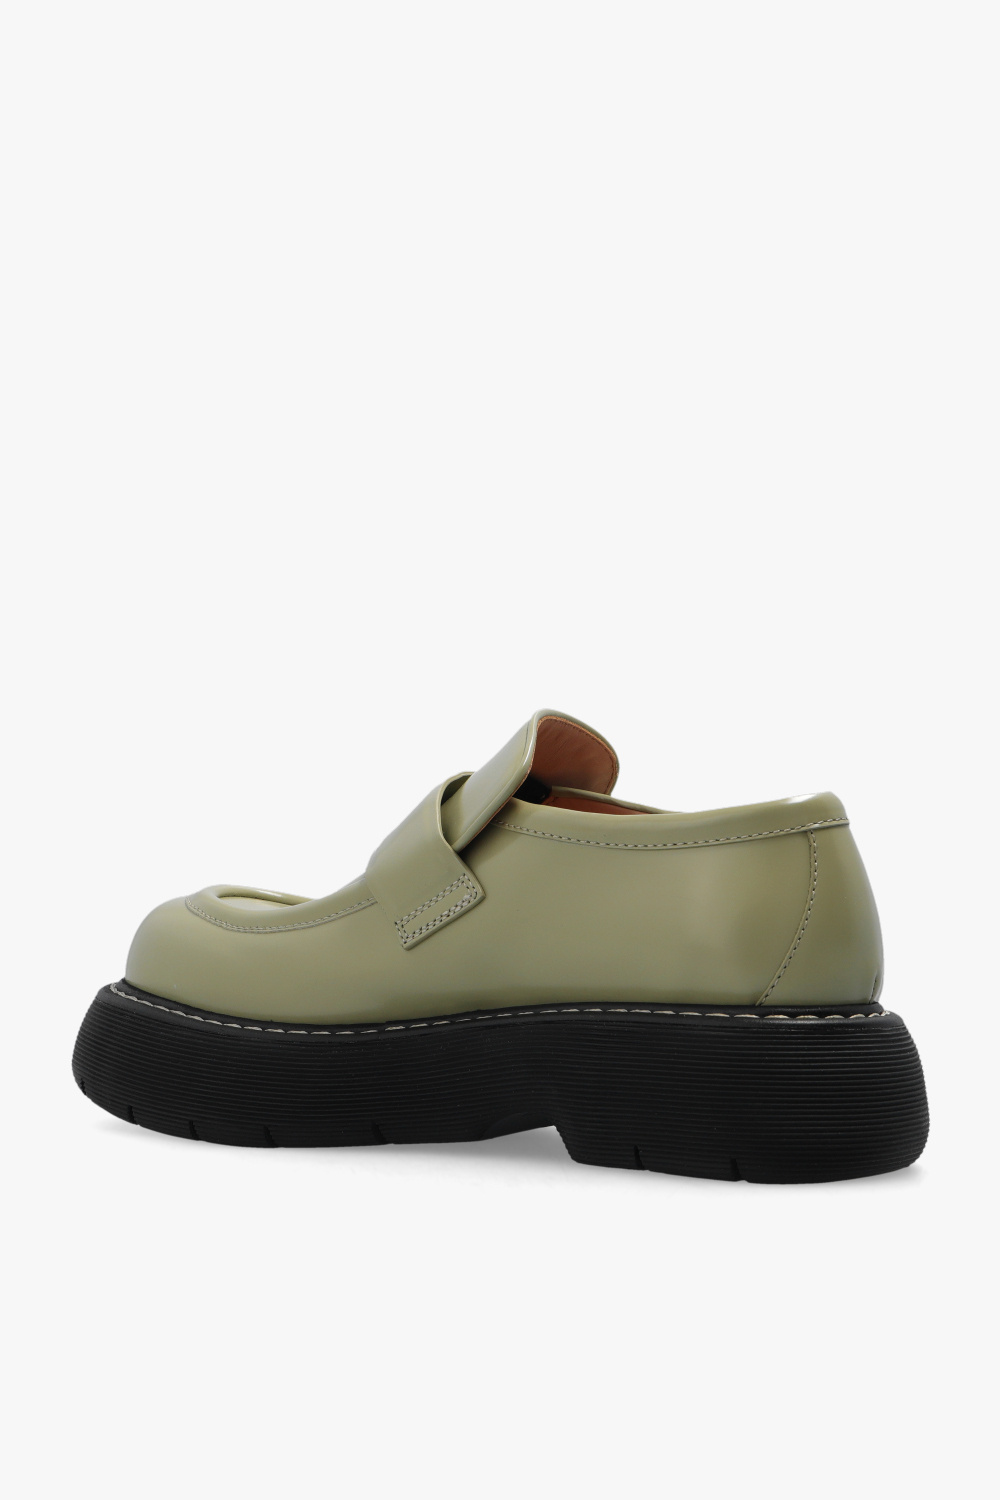 bottega shirt Veneta ‘Swell’ loafers